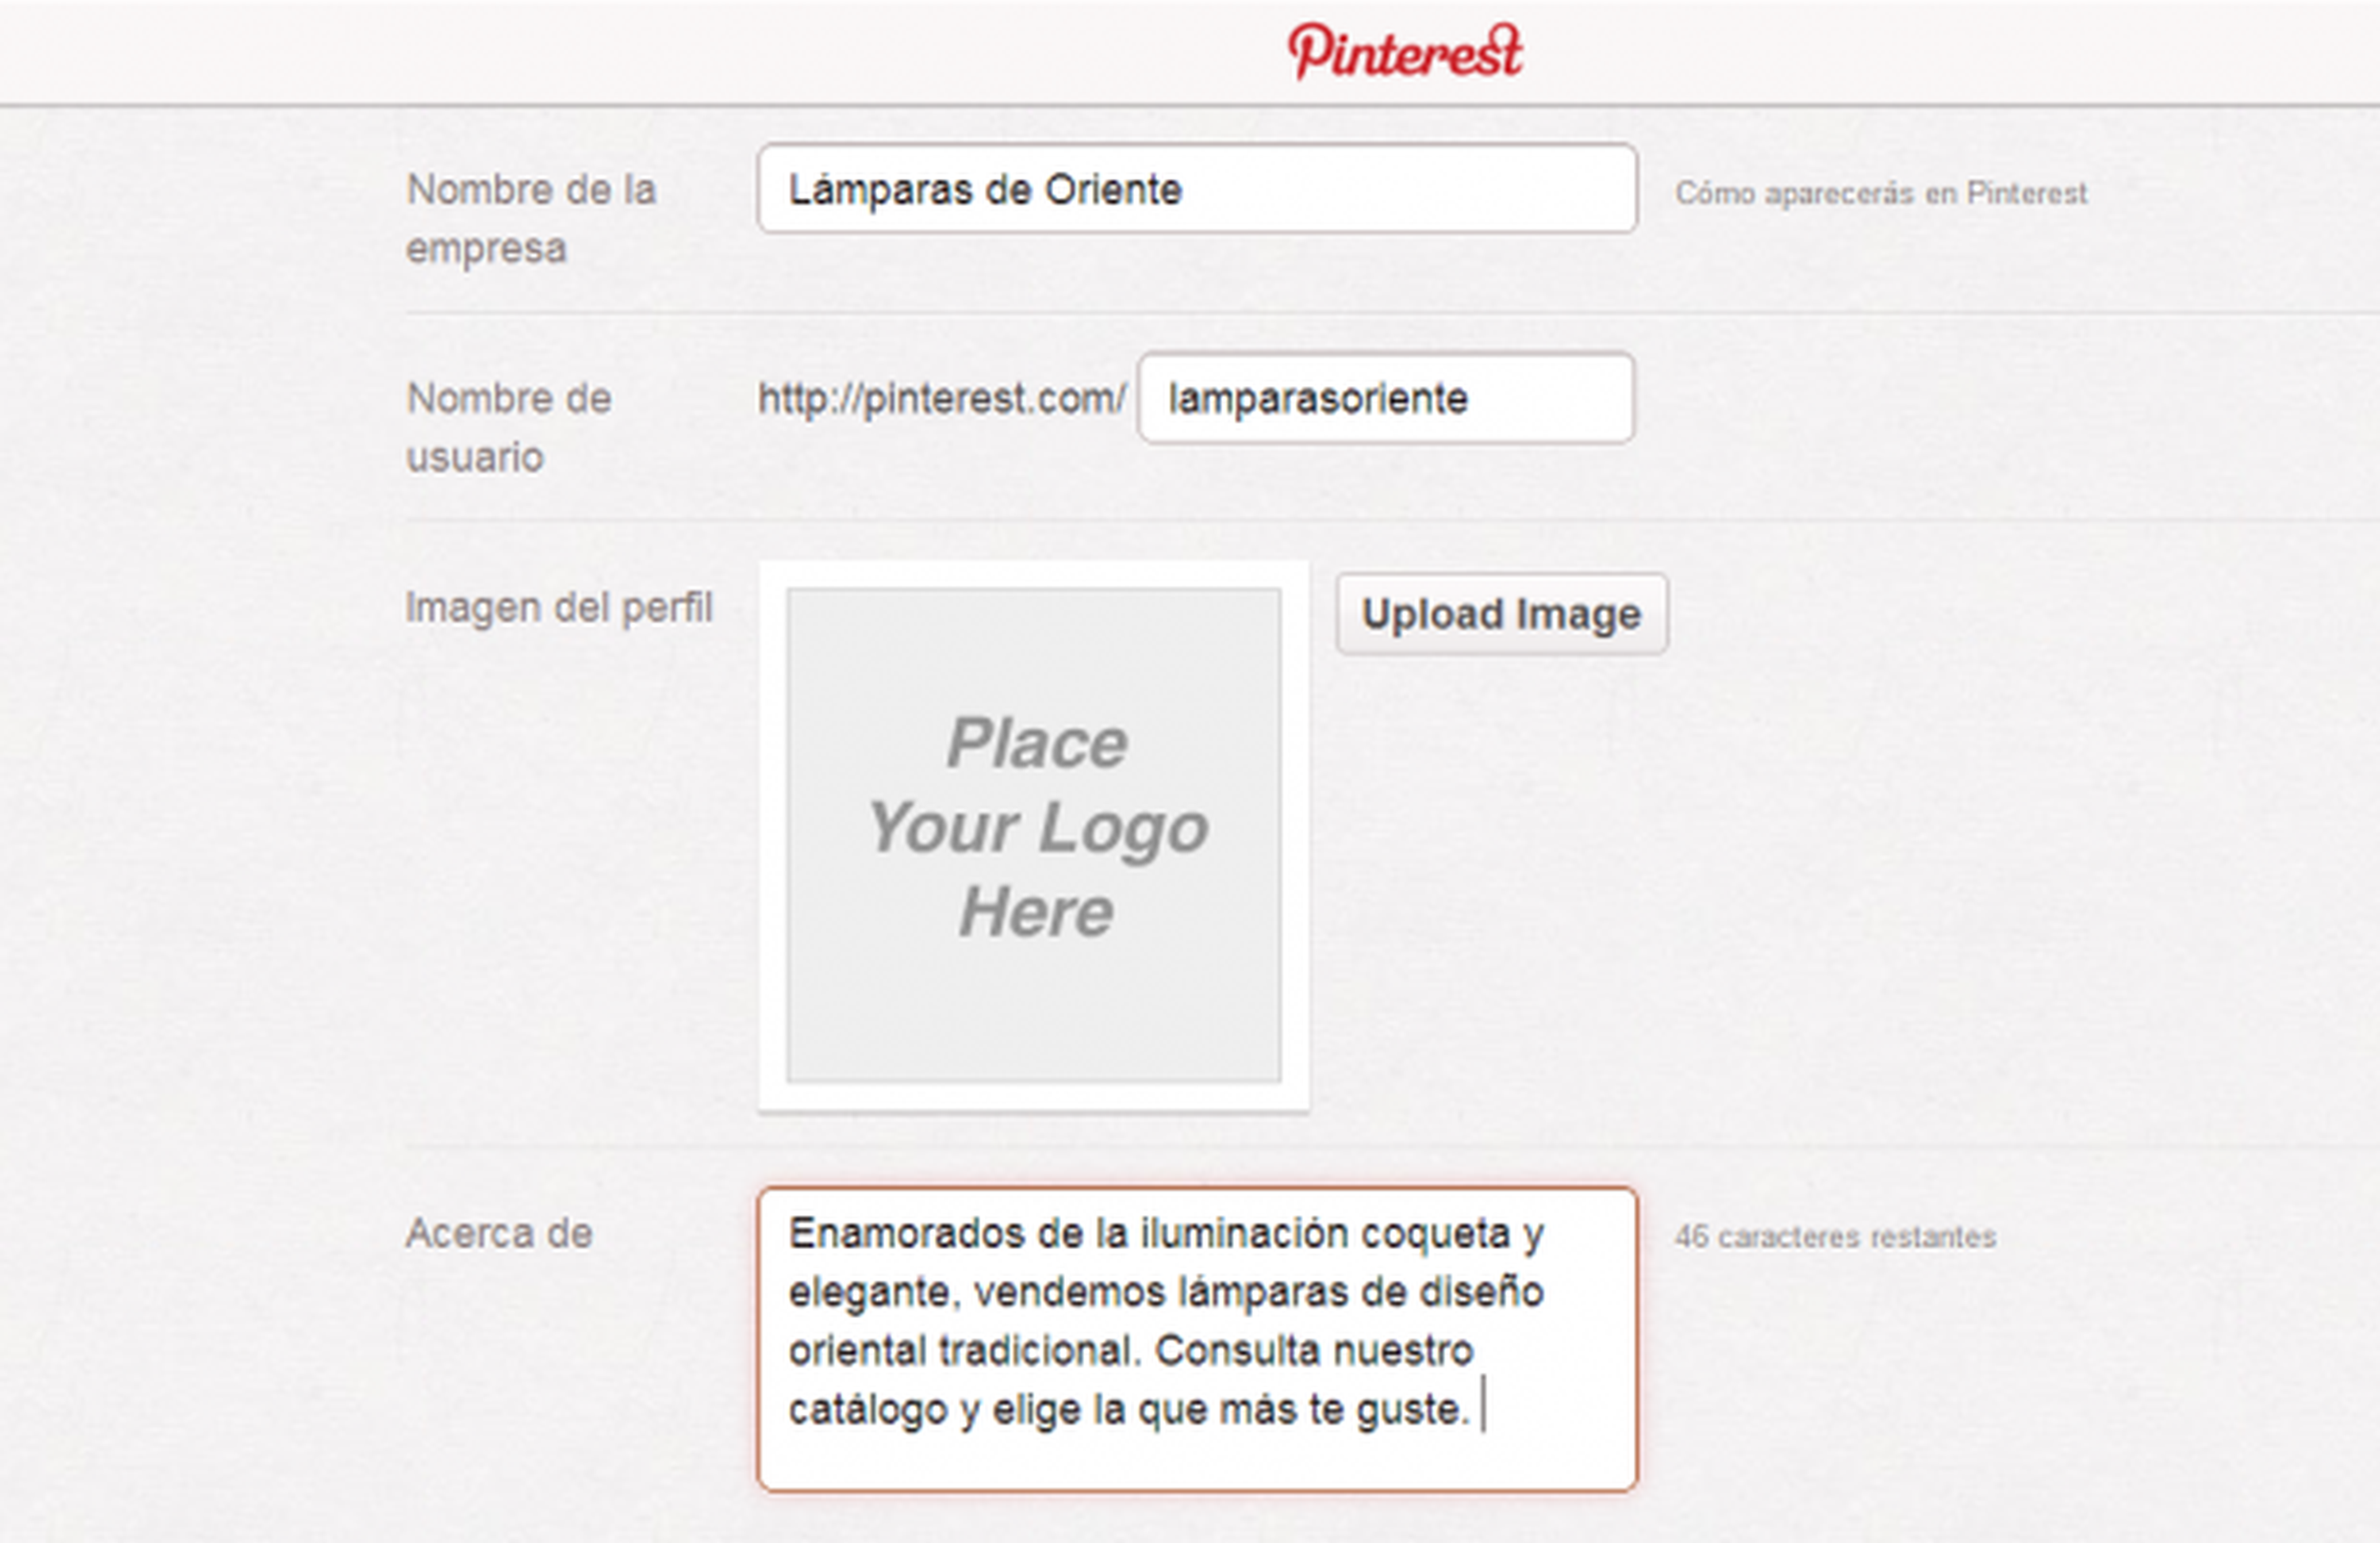 Añade información sobre tu empresa en Pinterest